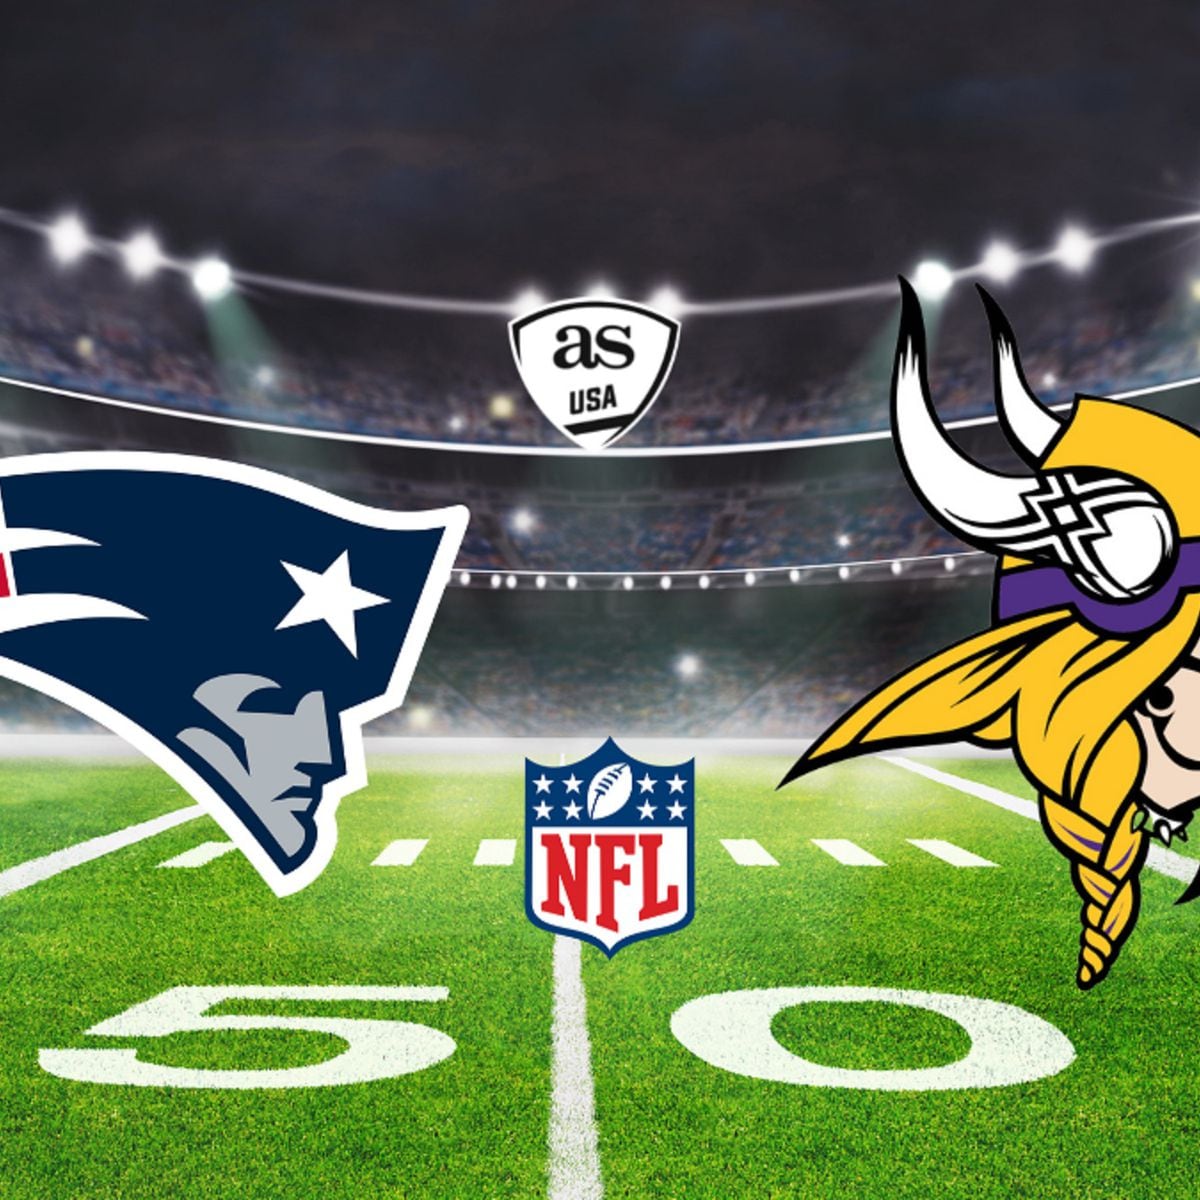 Cowboys vs Vikings live stream: How to watch NFL week 11 game online